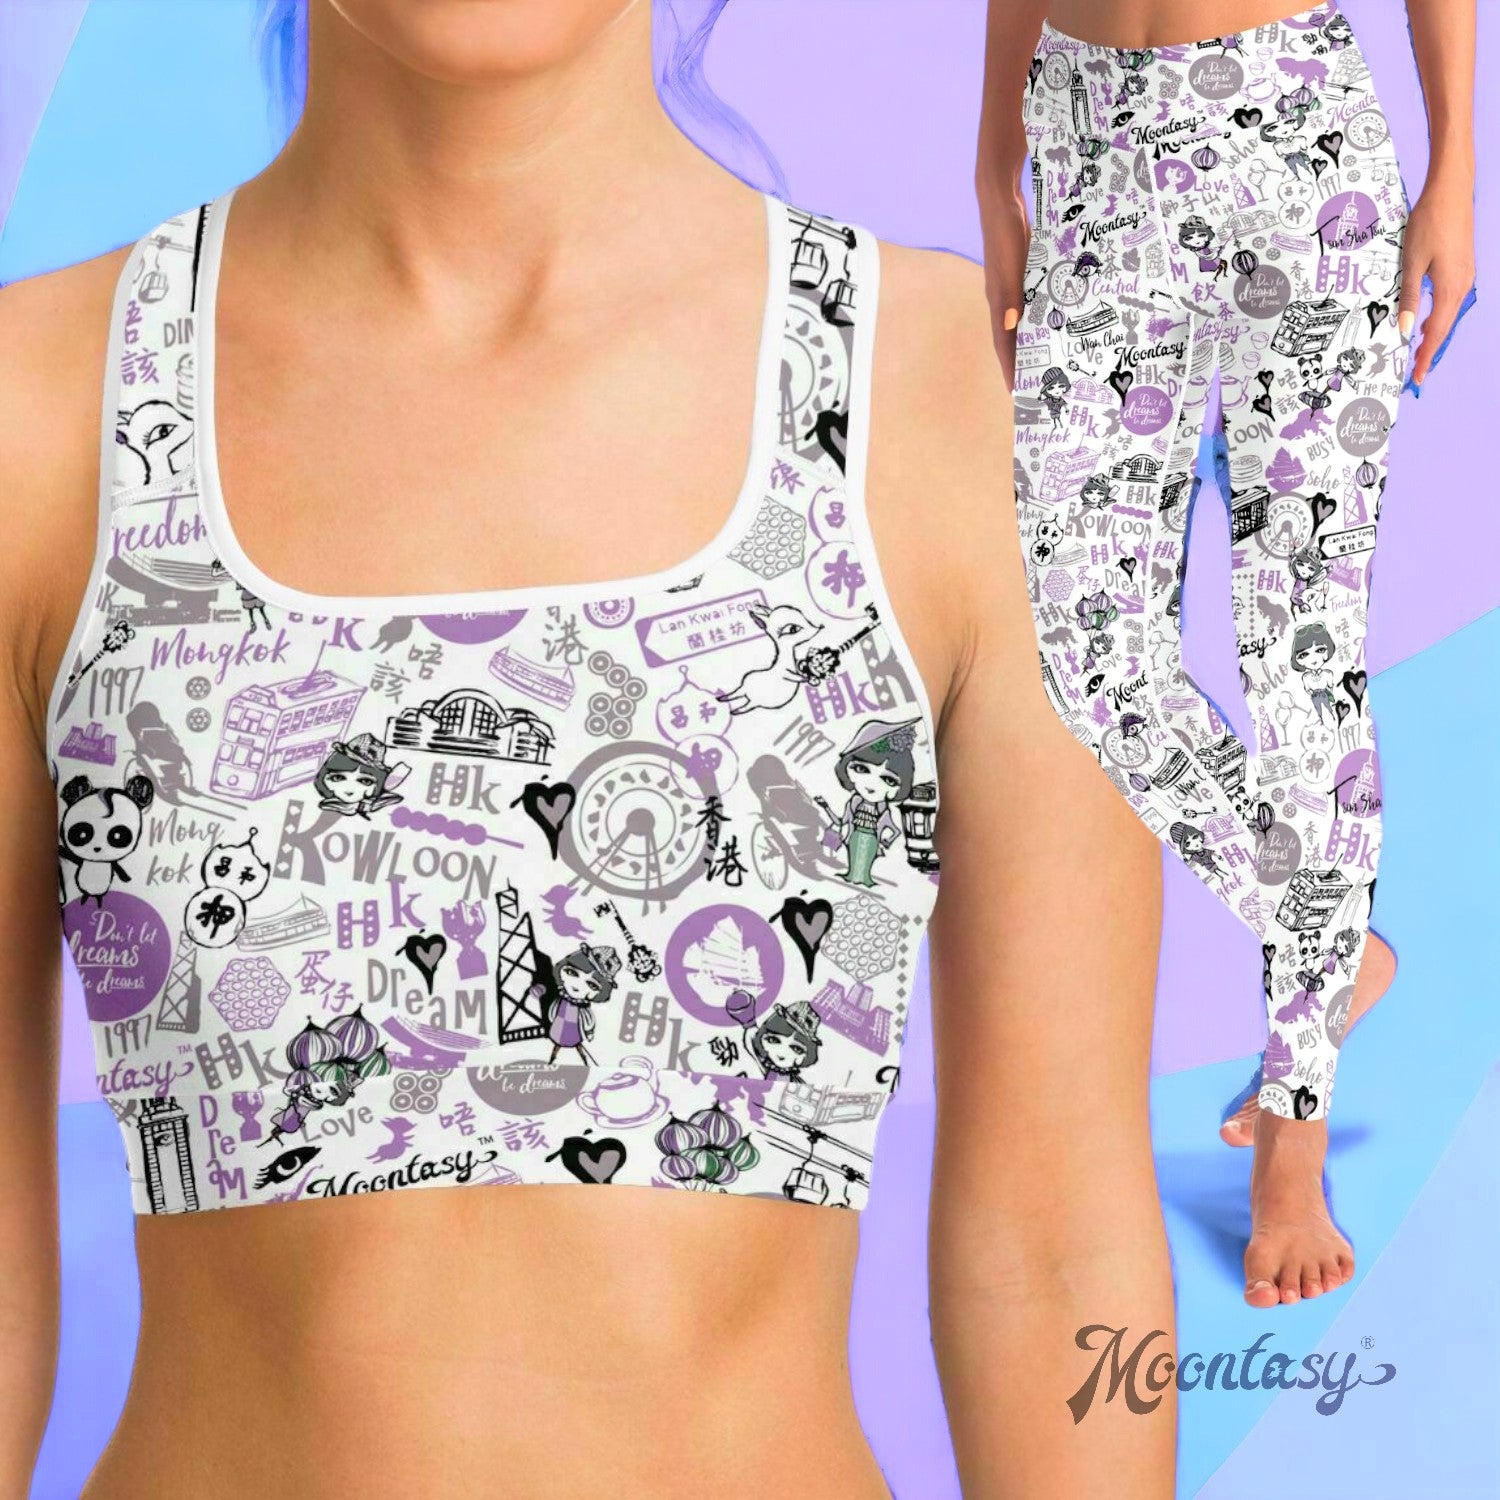 Hong Kong Pattern Yoga Pants And Top Set (Purple/for women)